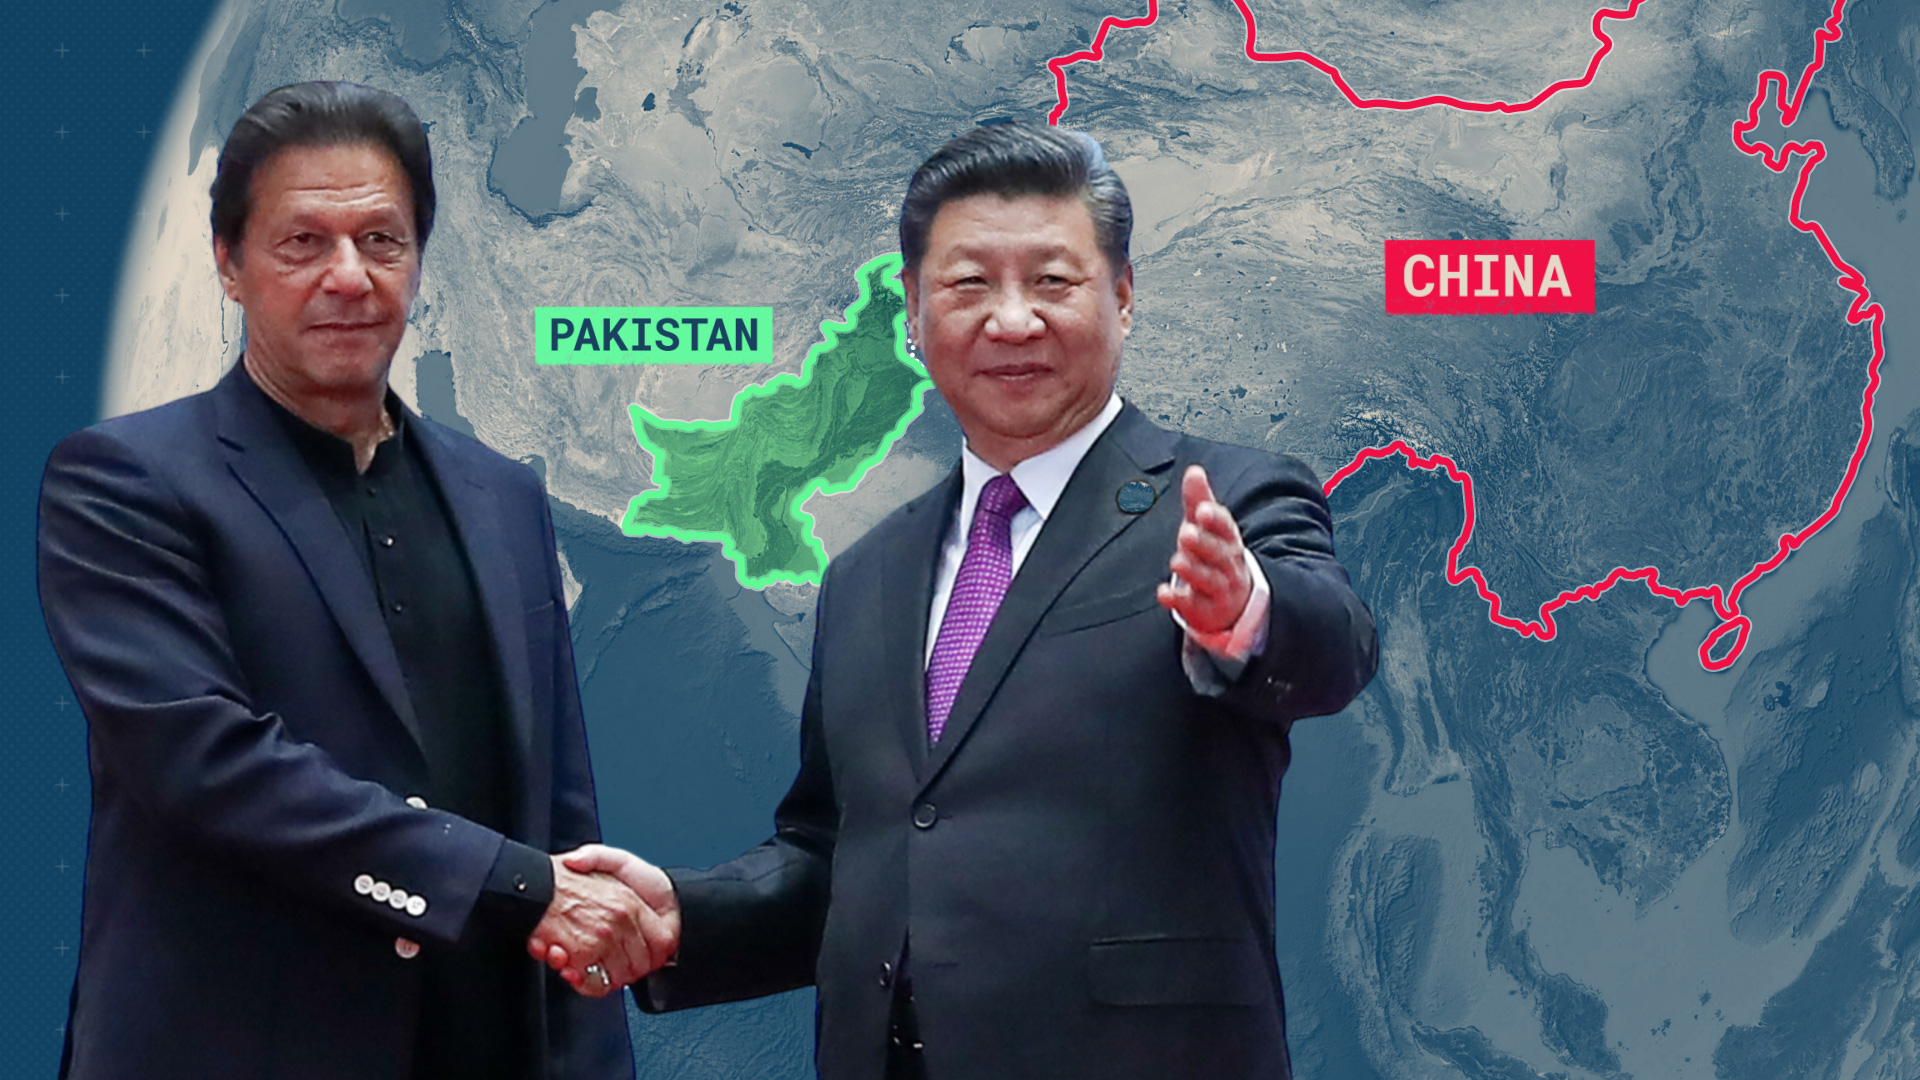 Pakistan-China relations: A start of new chapter - ANALYSIS